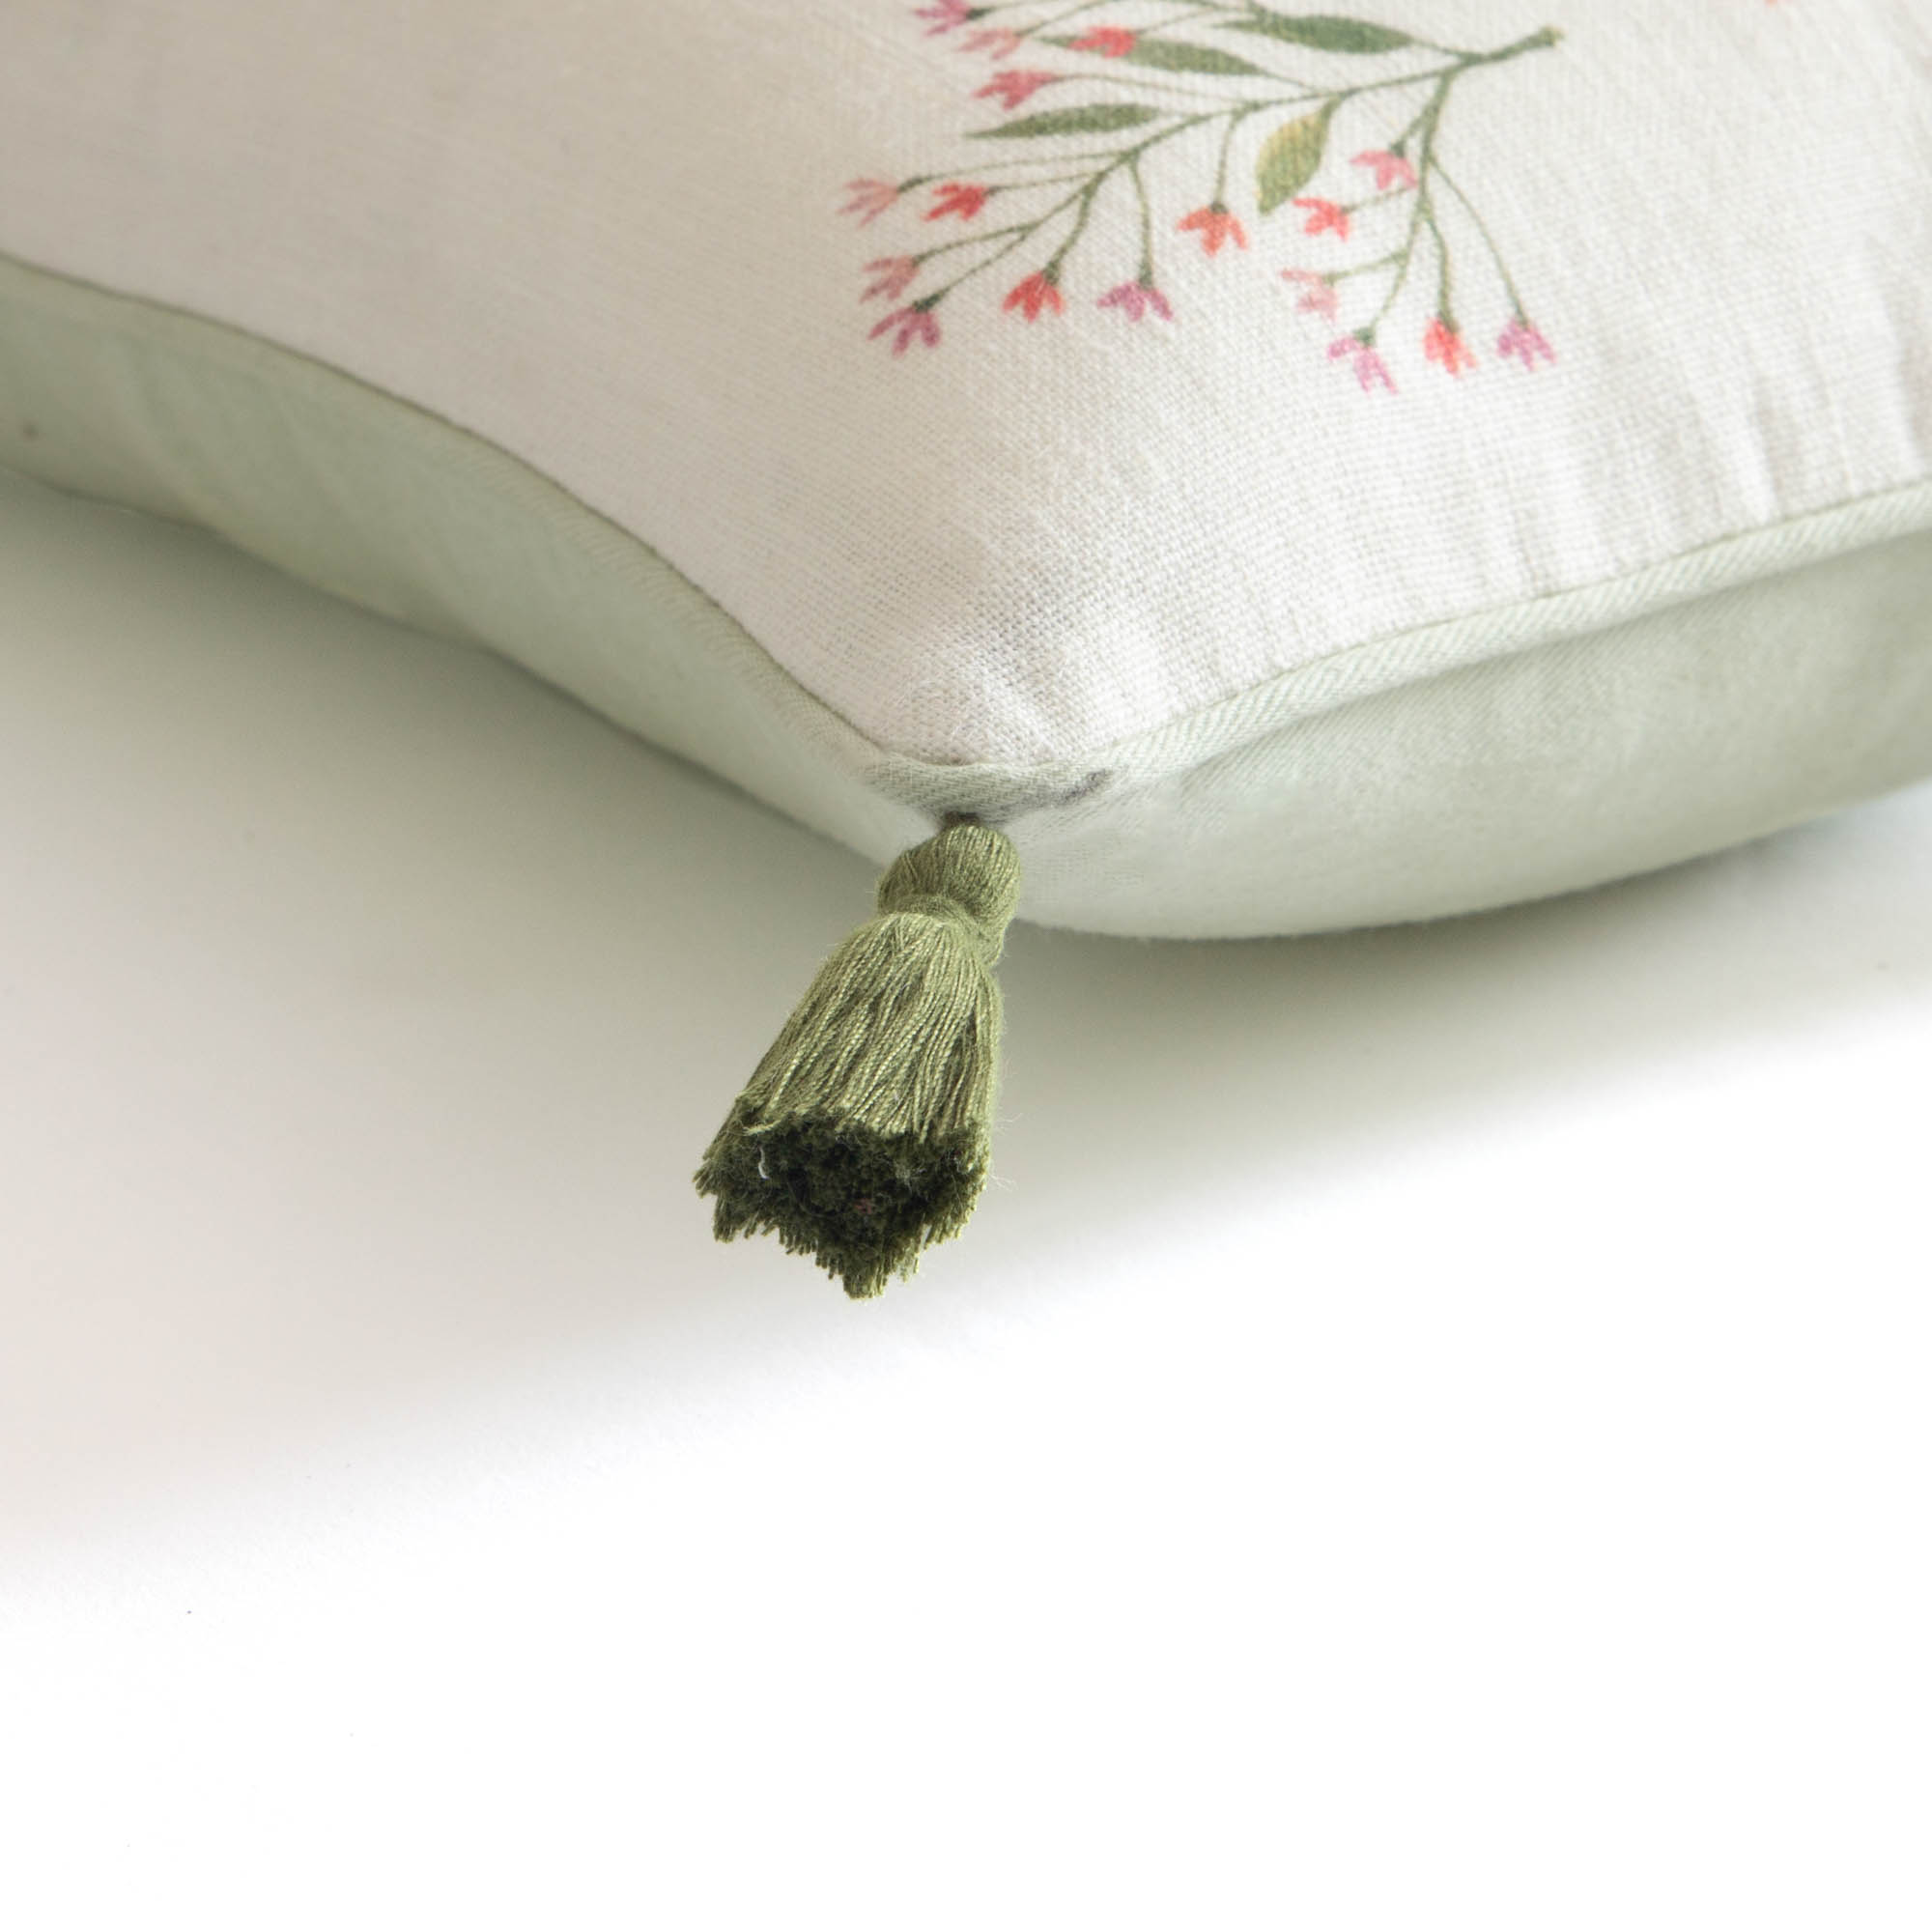 Princess Margaret’s Favorite Flower Cushion Cover